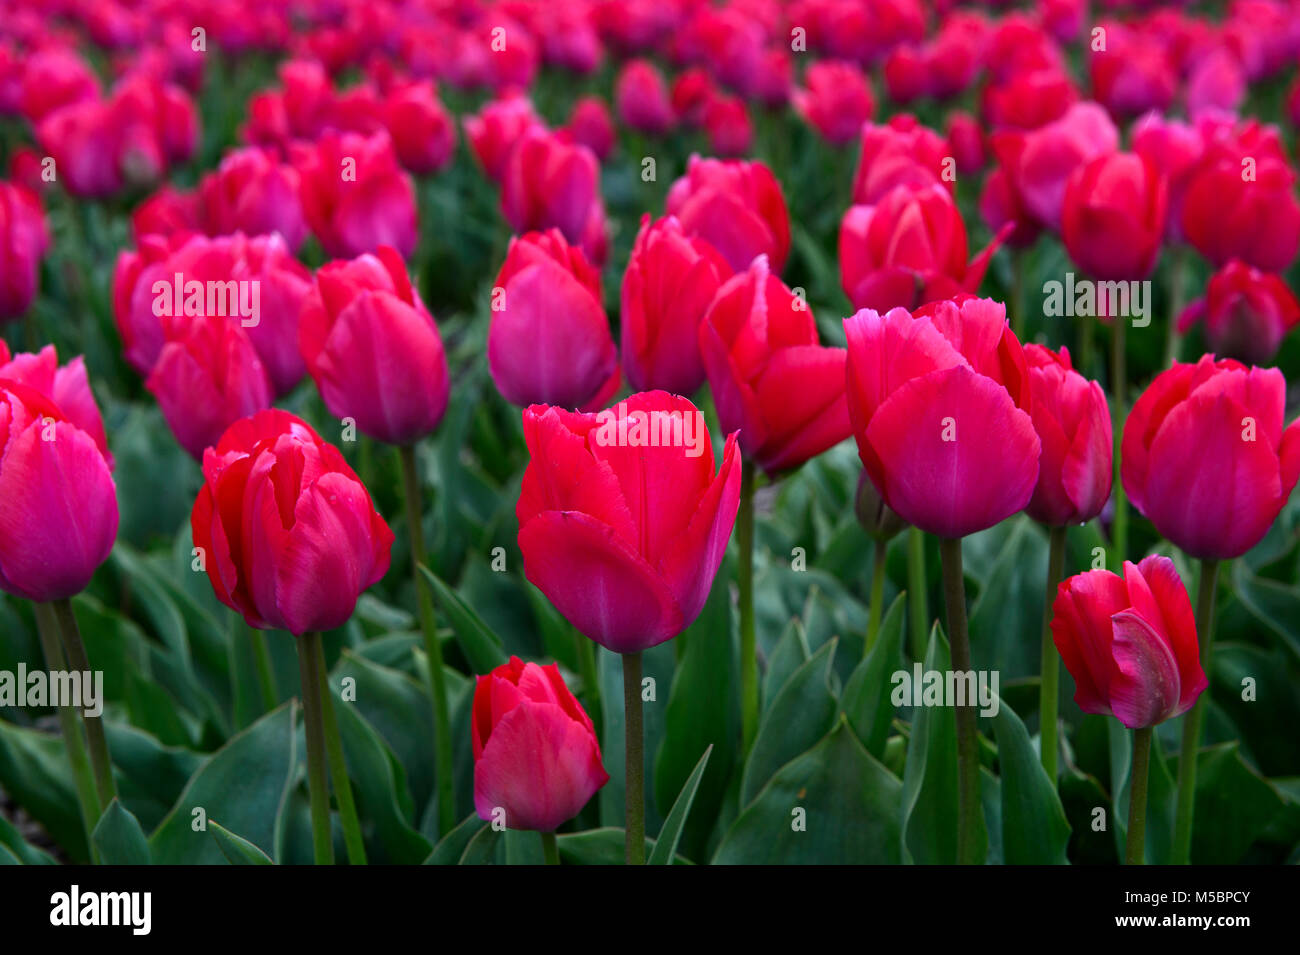 Field of Tulip flowers of the variety Lady van Eijk, Bollenstreek, Netherlands Stock Photo